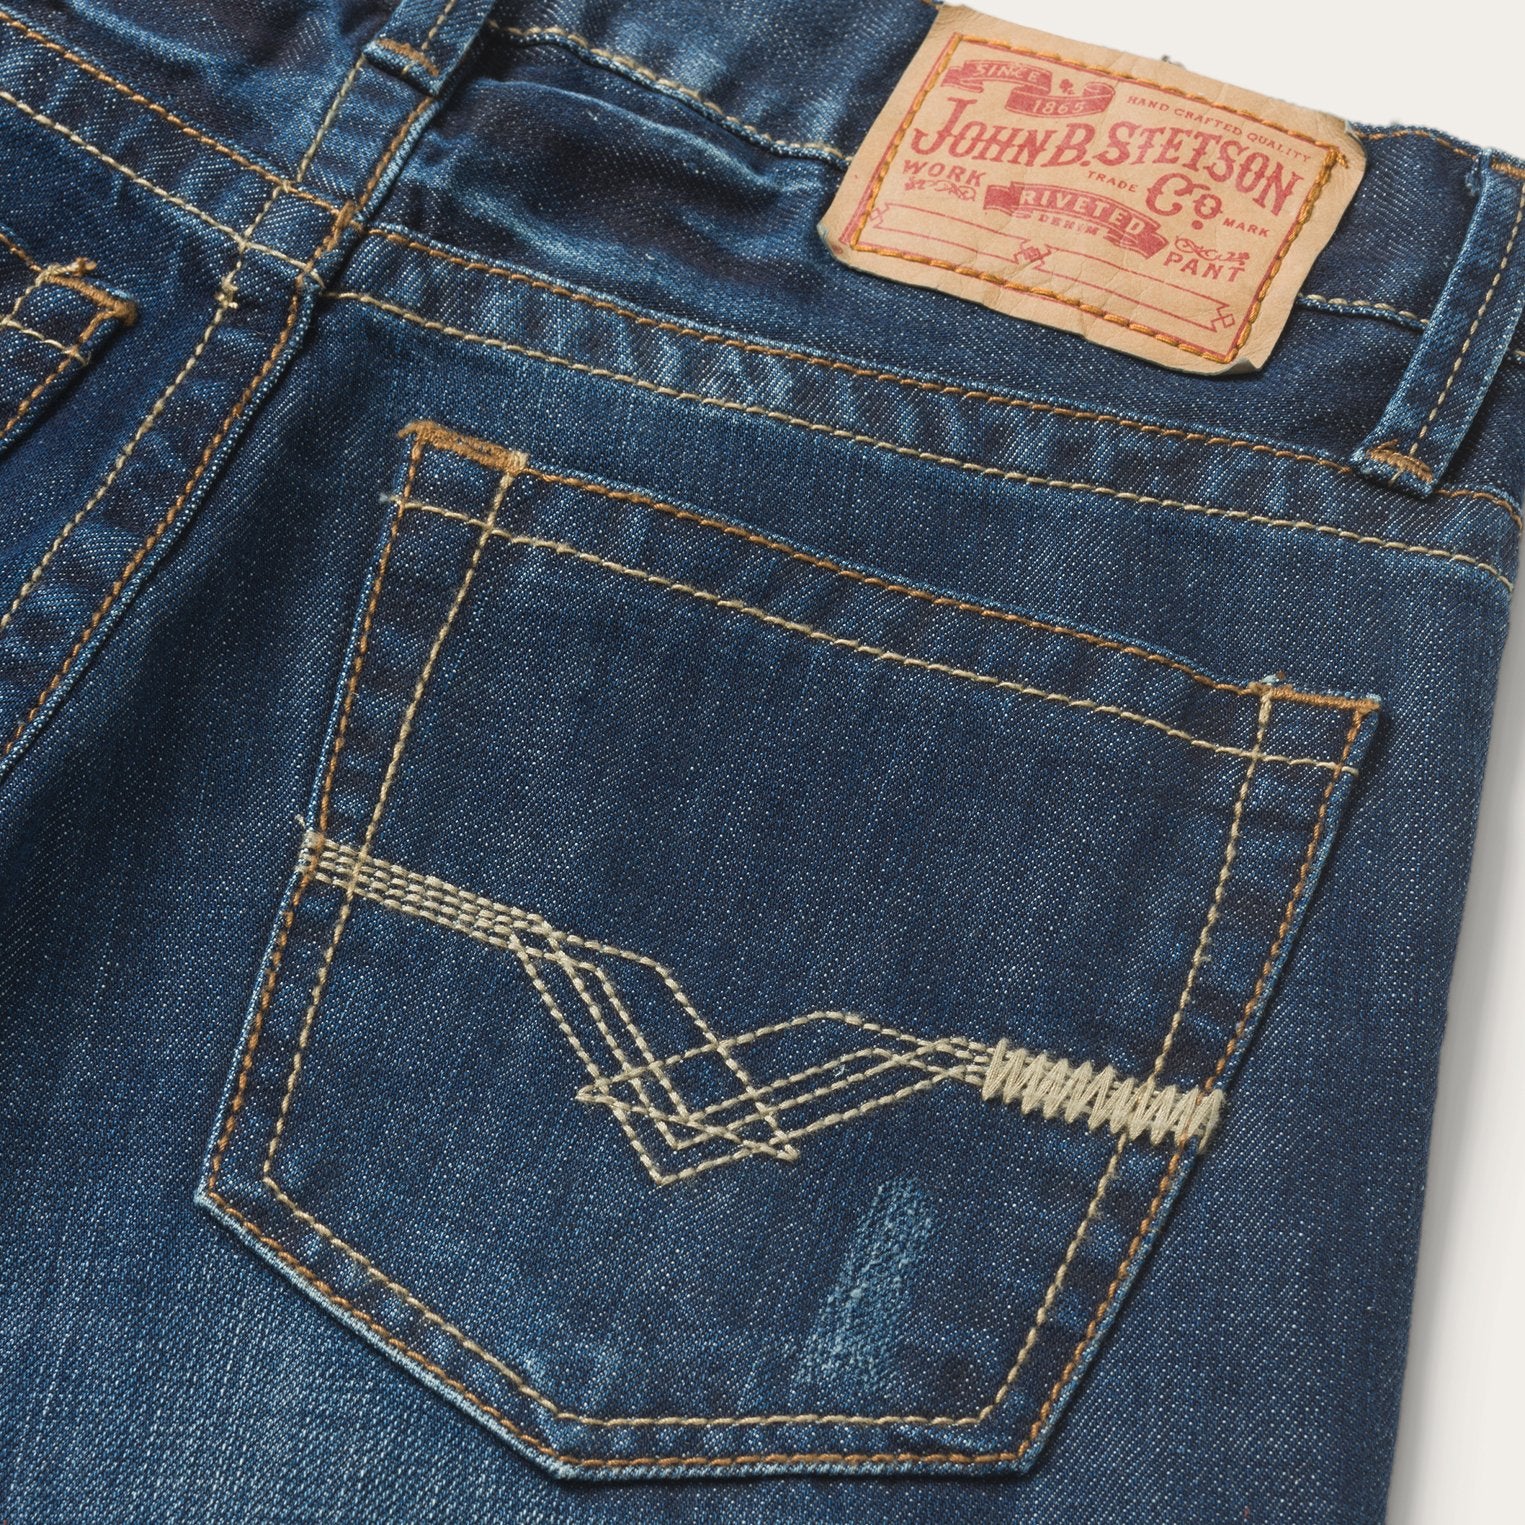 Stylish Back Pocket Detail on Bespoke Jeans